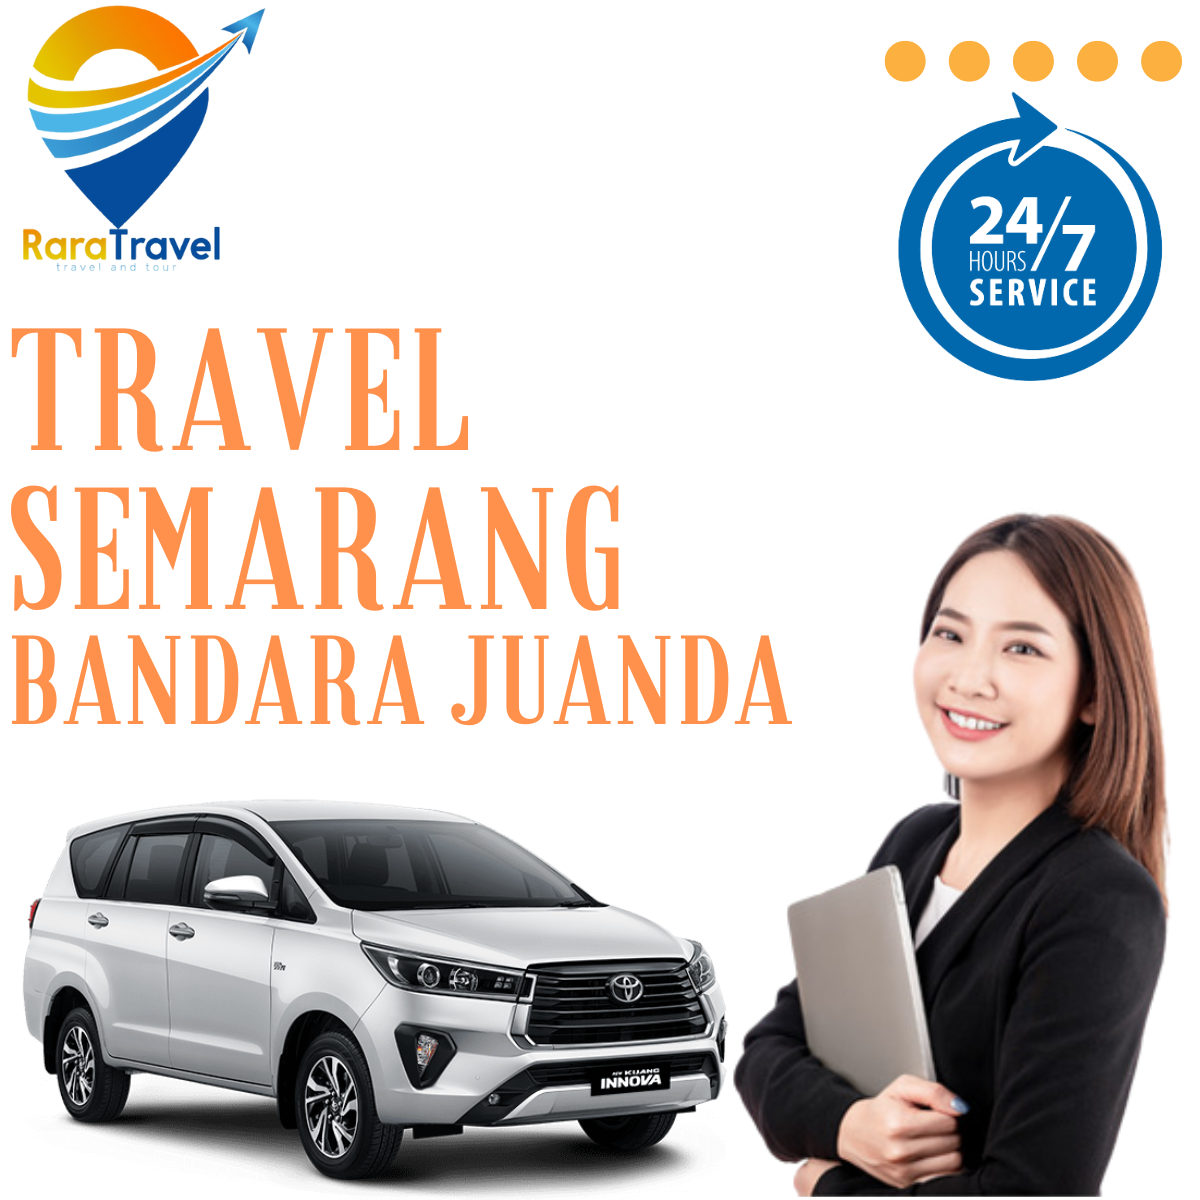 Travel Semarang ke Bandara Juanda PP Murah - RARATRAVEL.ID